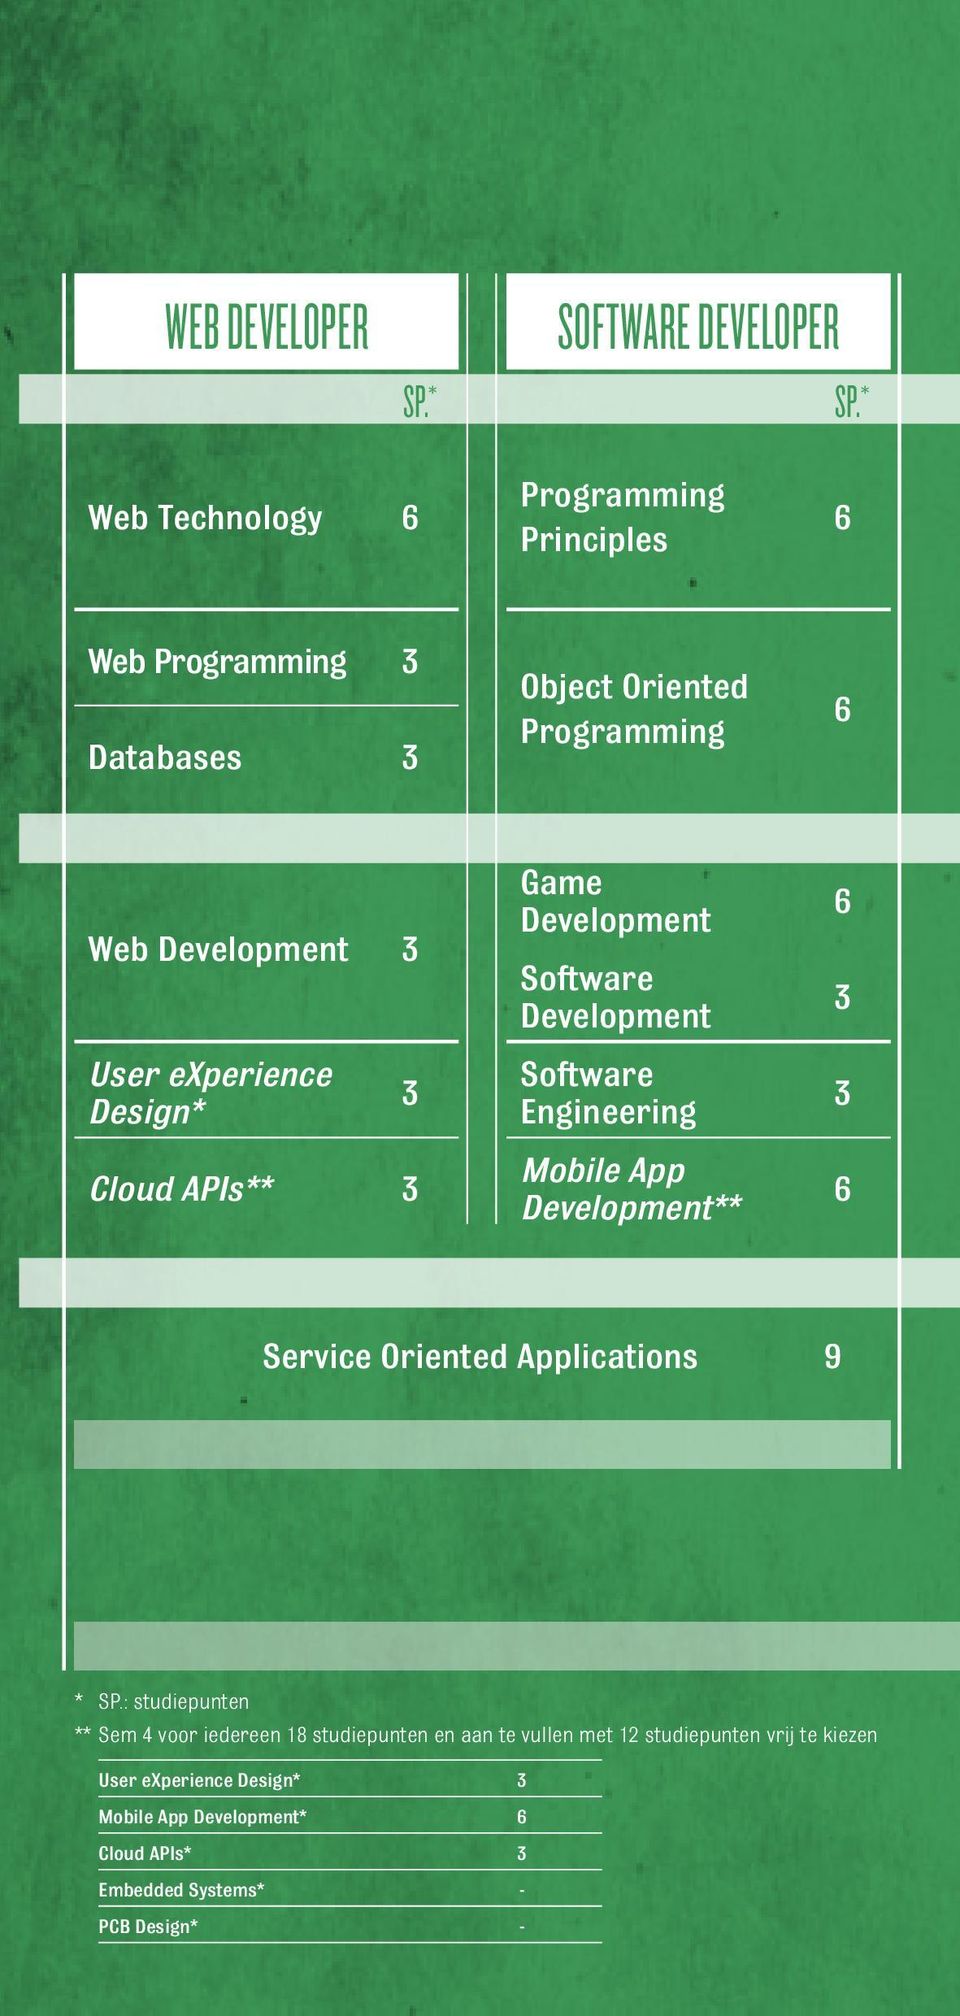 Design* Cloud APIs** Game Development Software Development Software Engineering Mobile App Development** Service Oriented